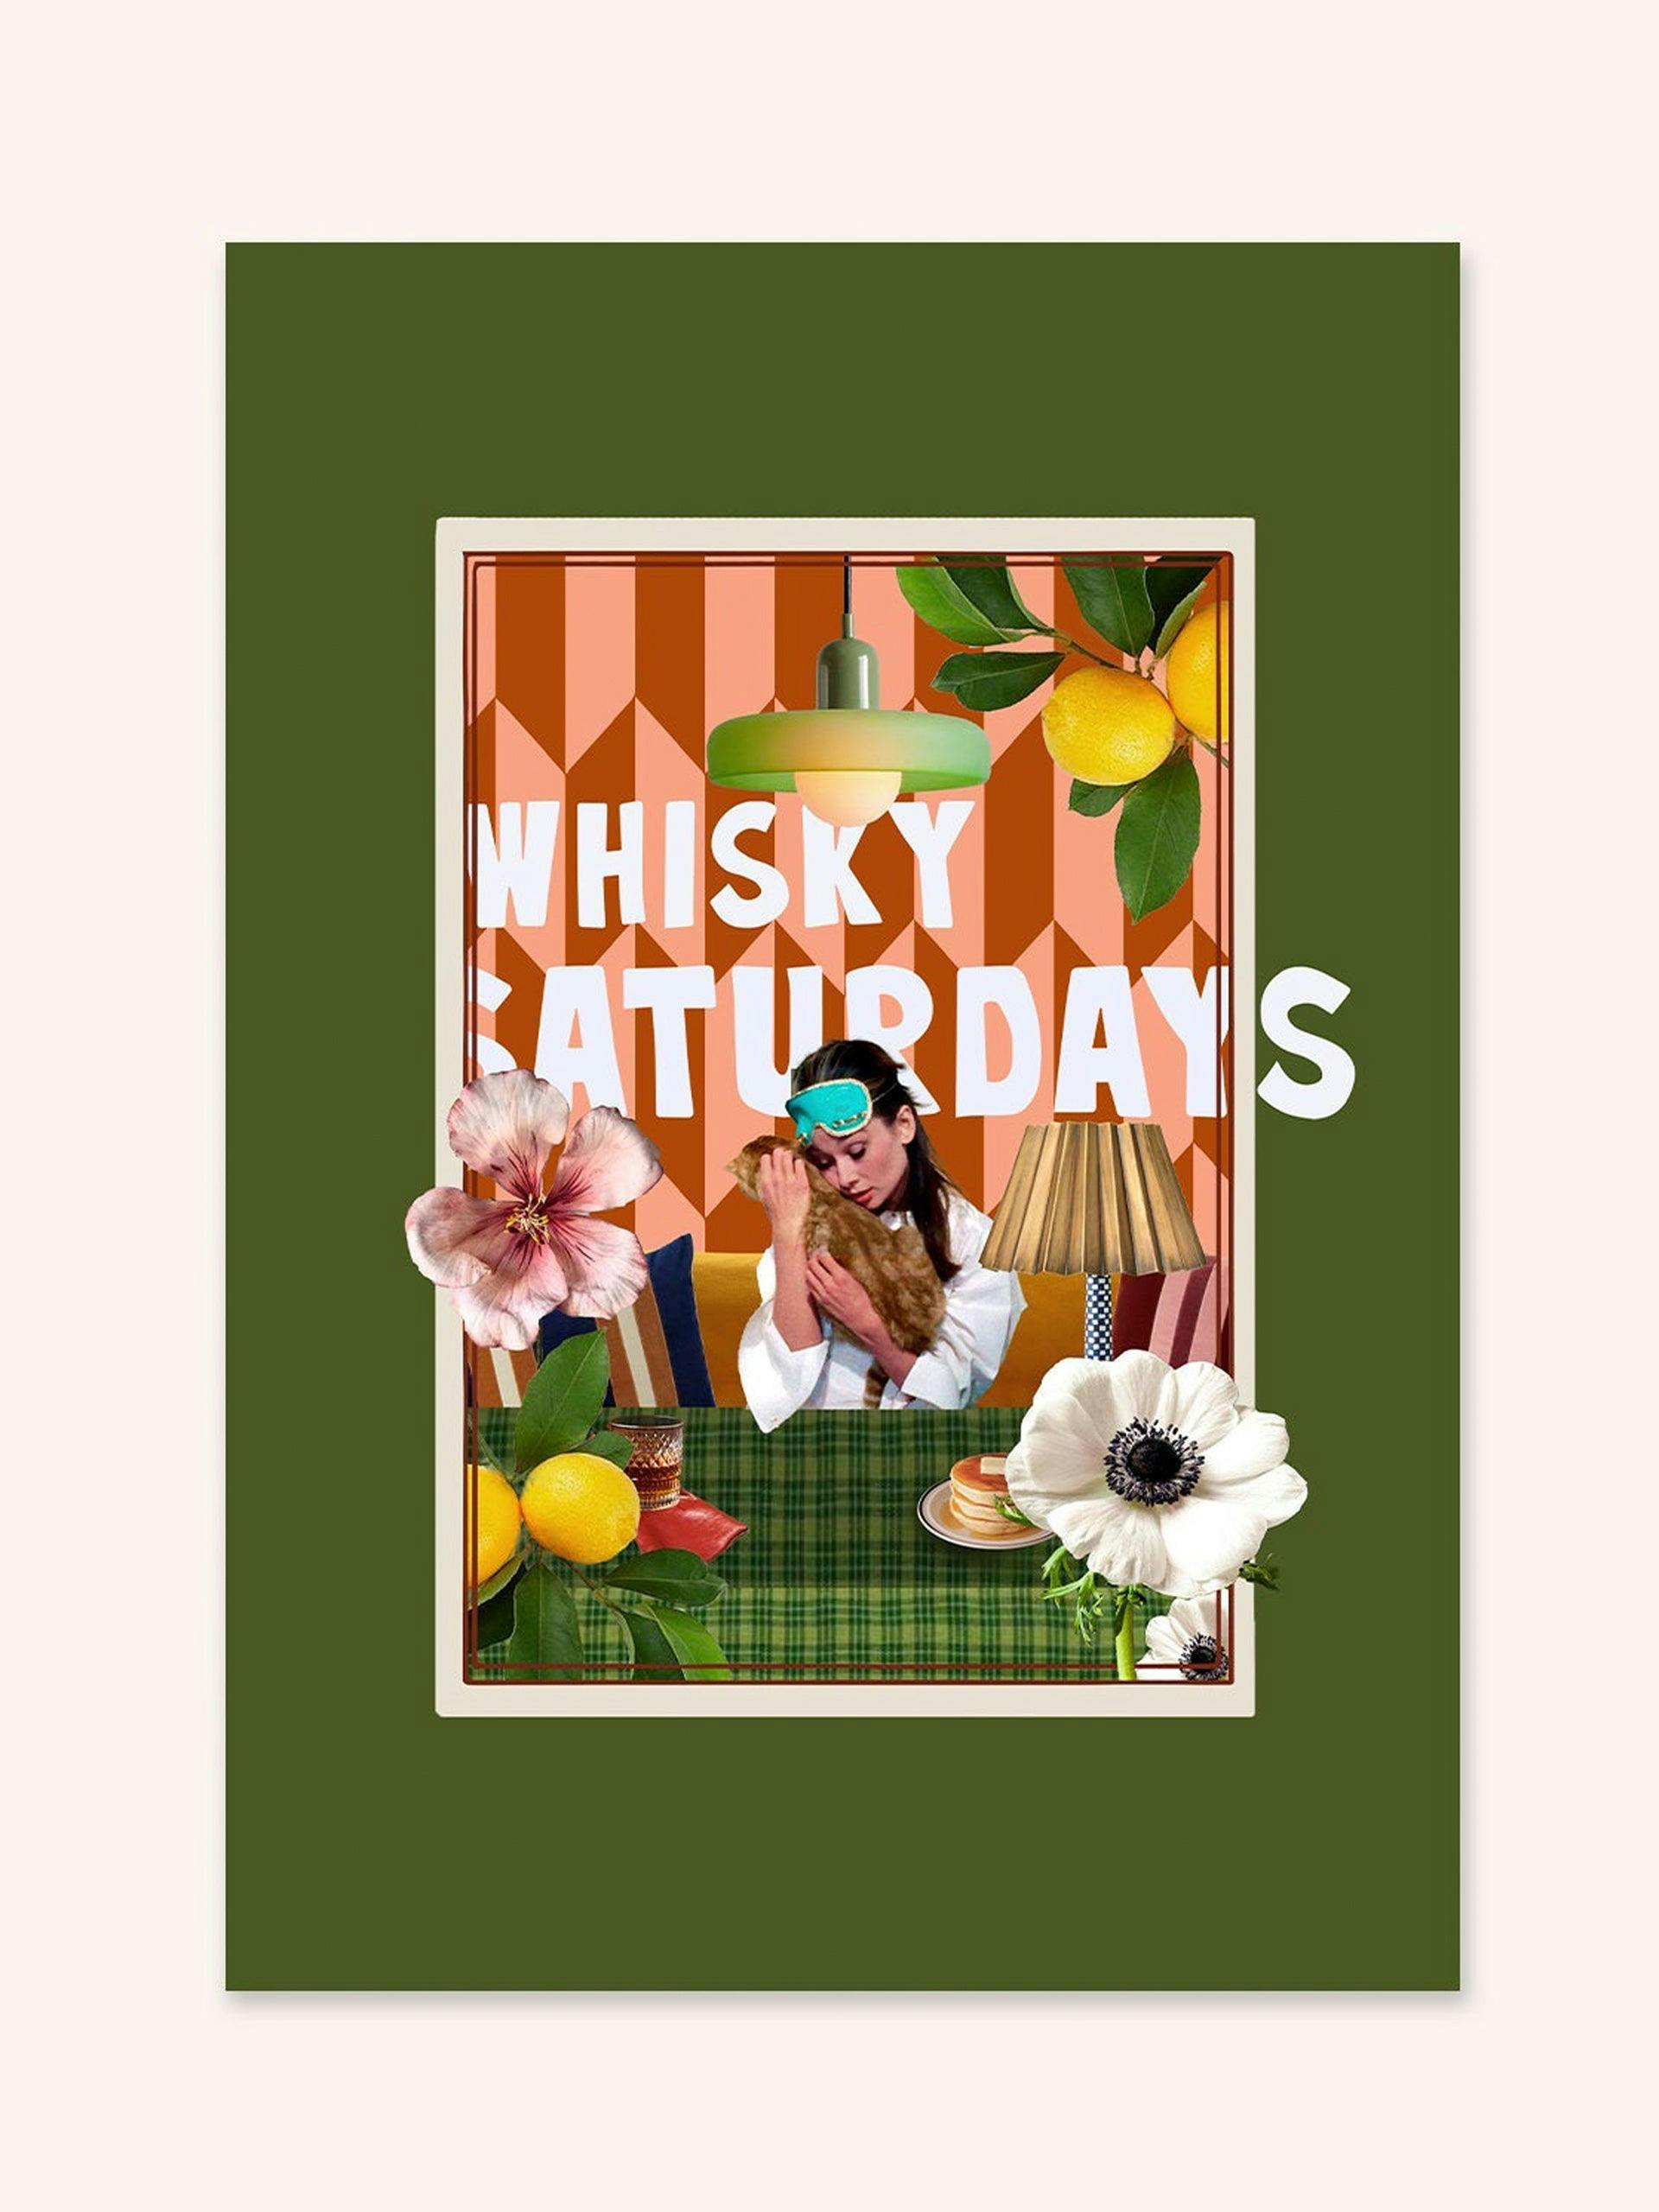 Whisky Saturdays' art print